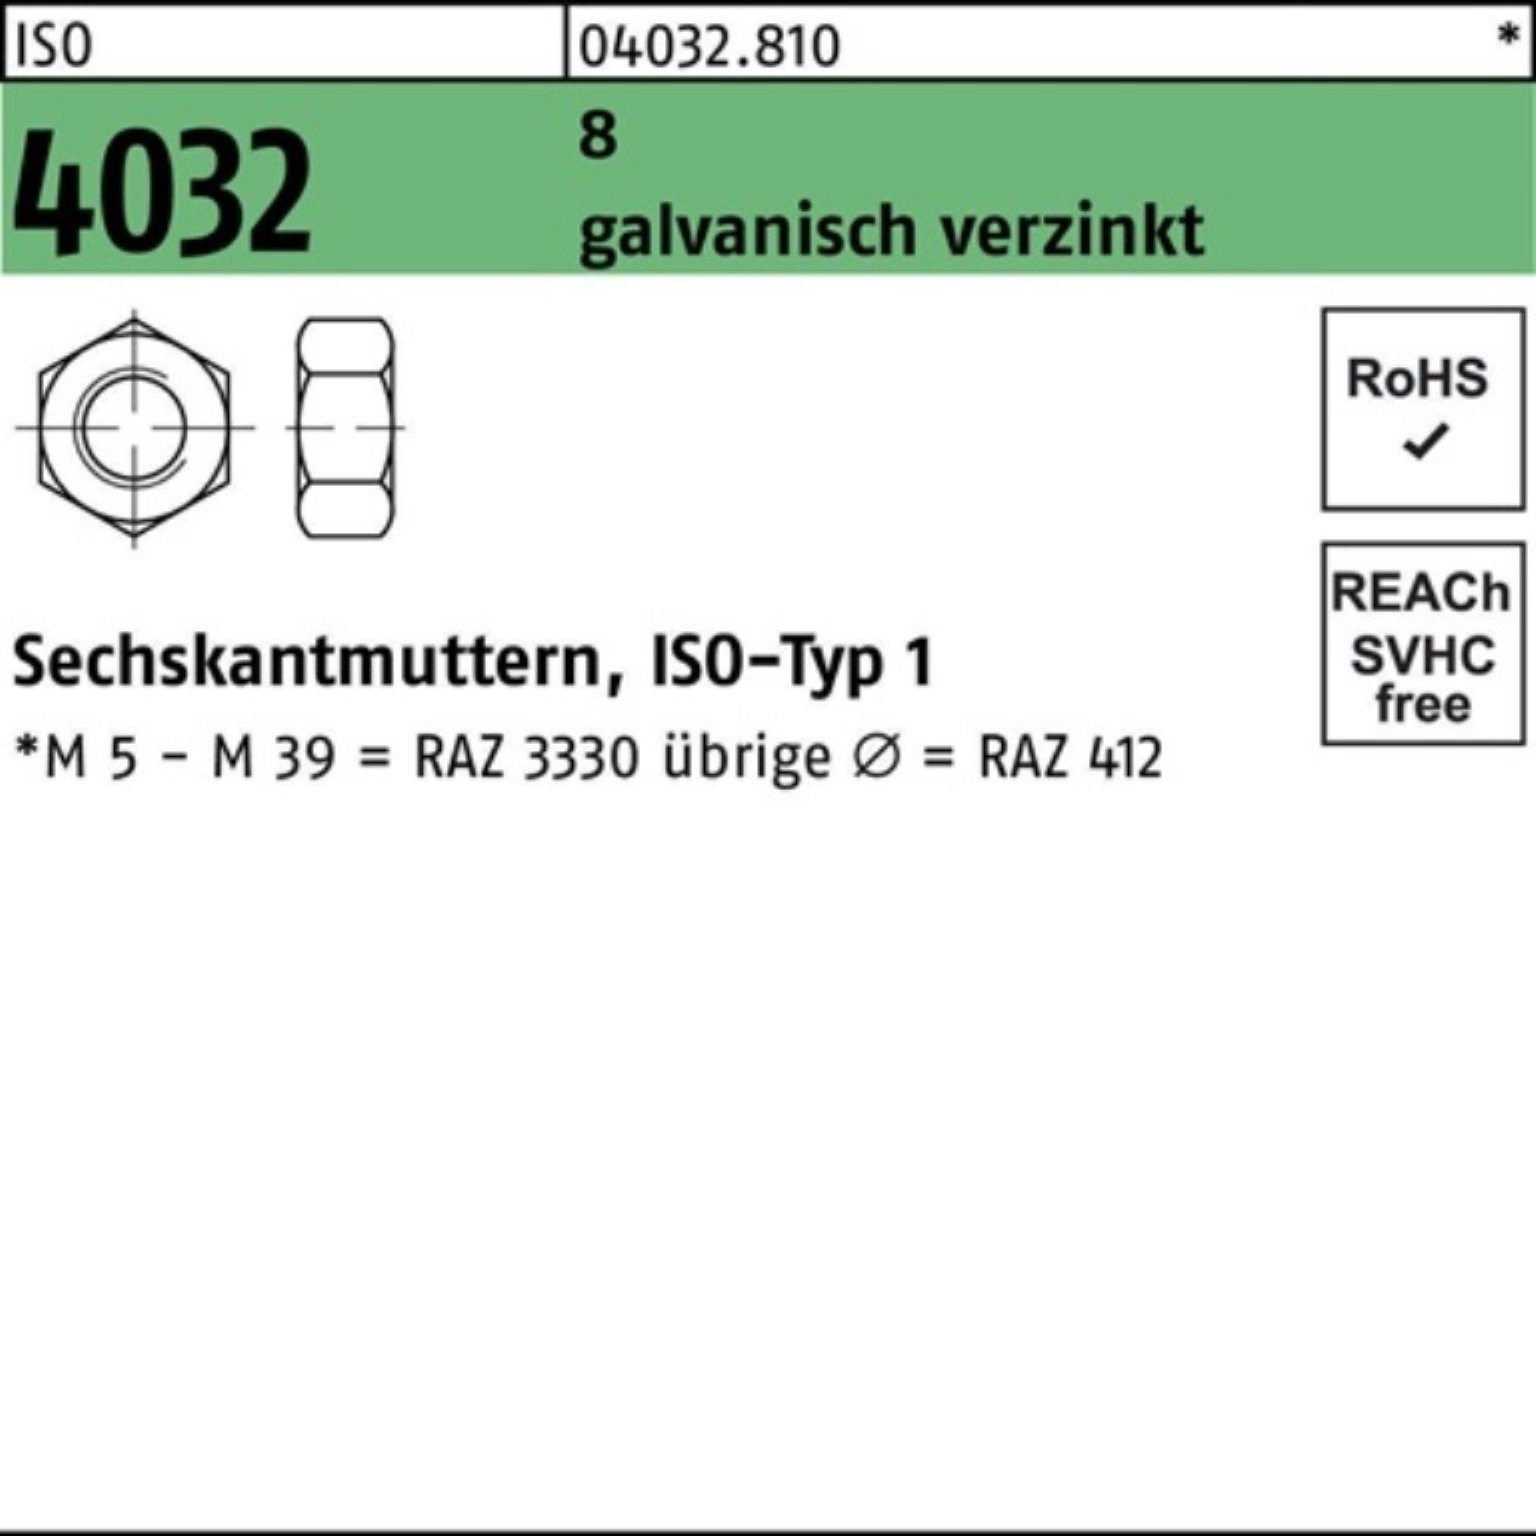 Bufab Pack Muttern 4032 Sechskantmutter 8 galv.verz. 40 ISO ISO 100er Stück 100 M10